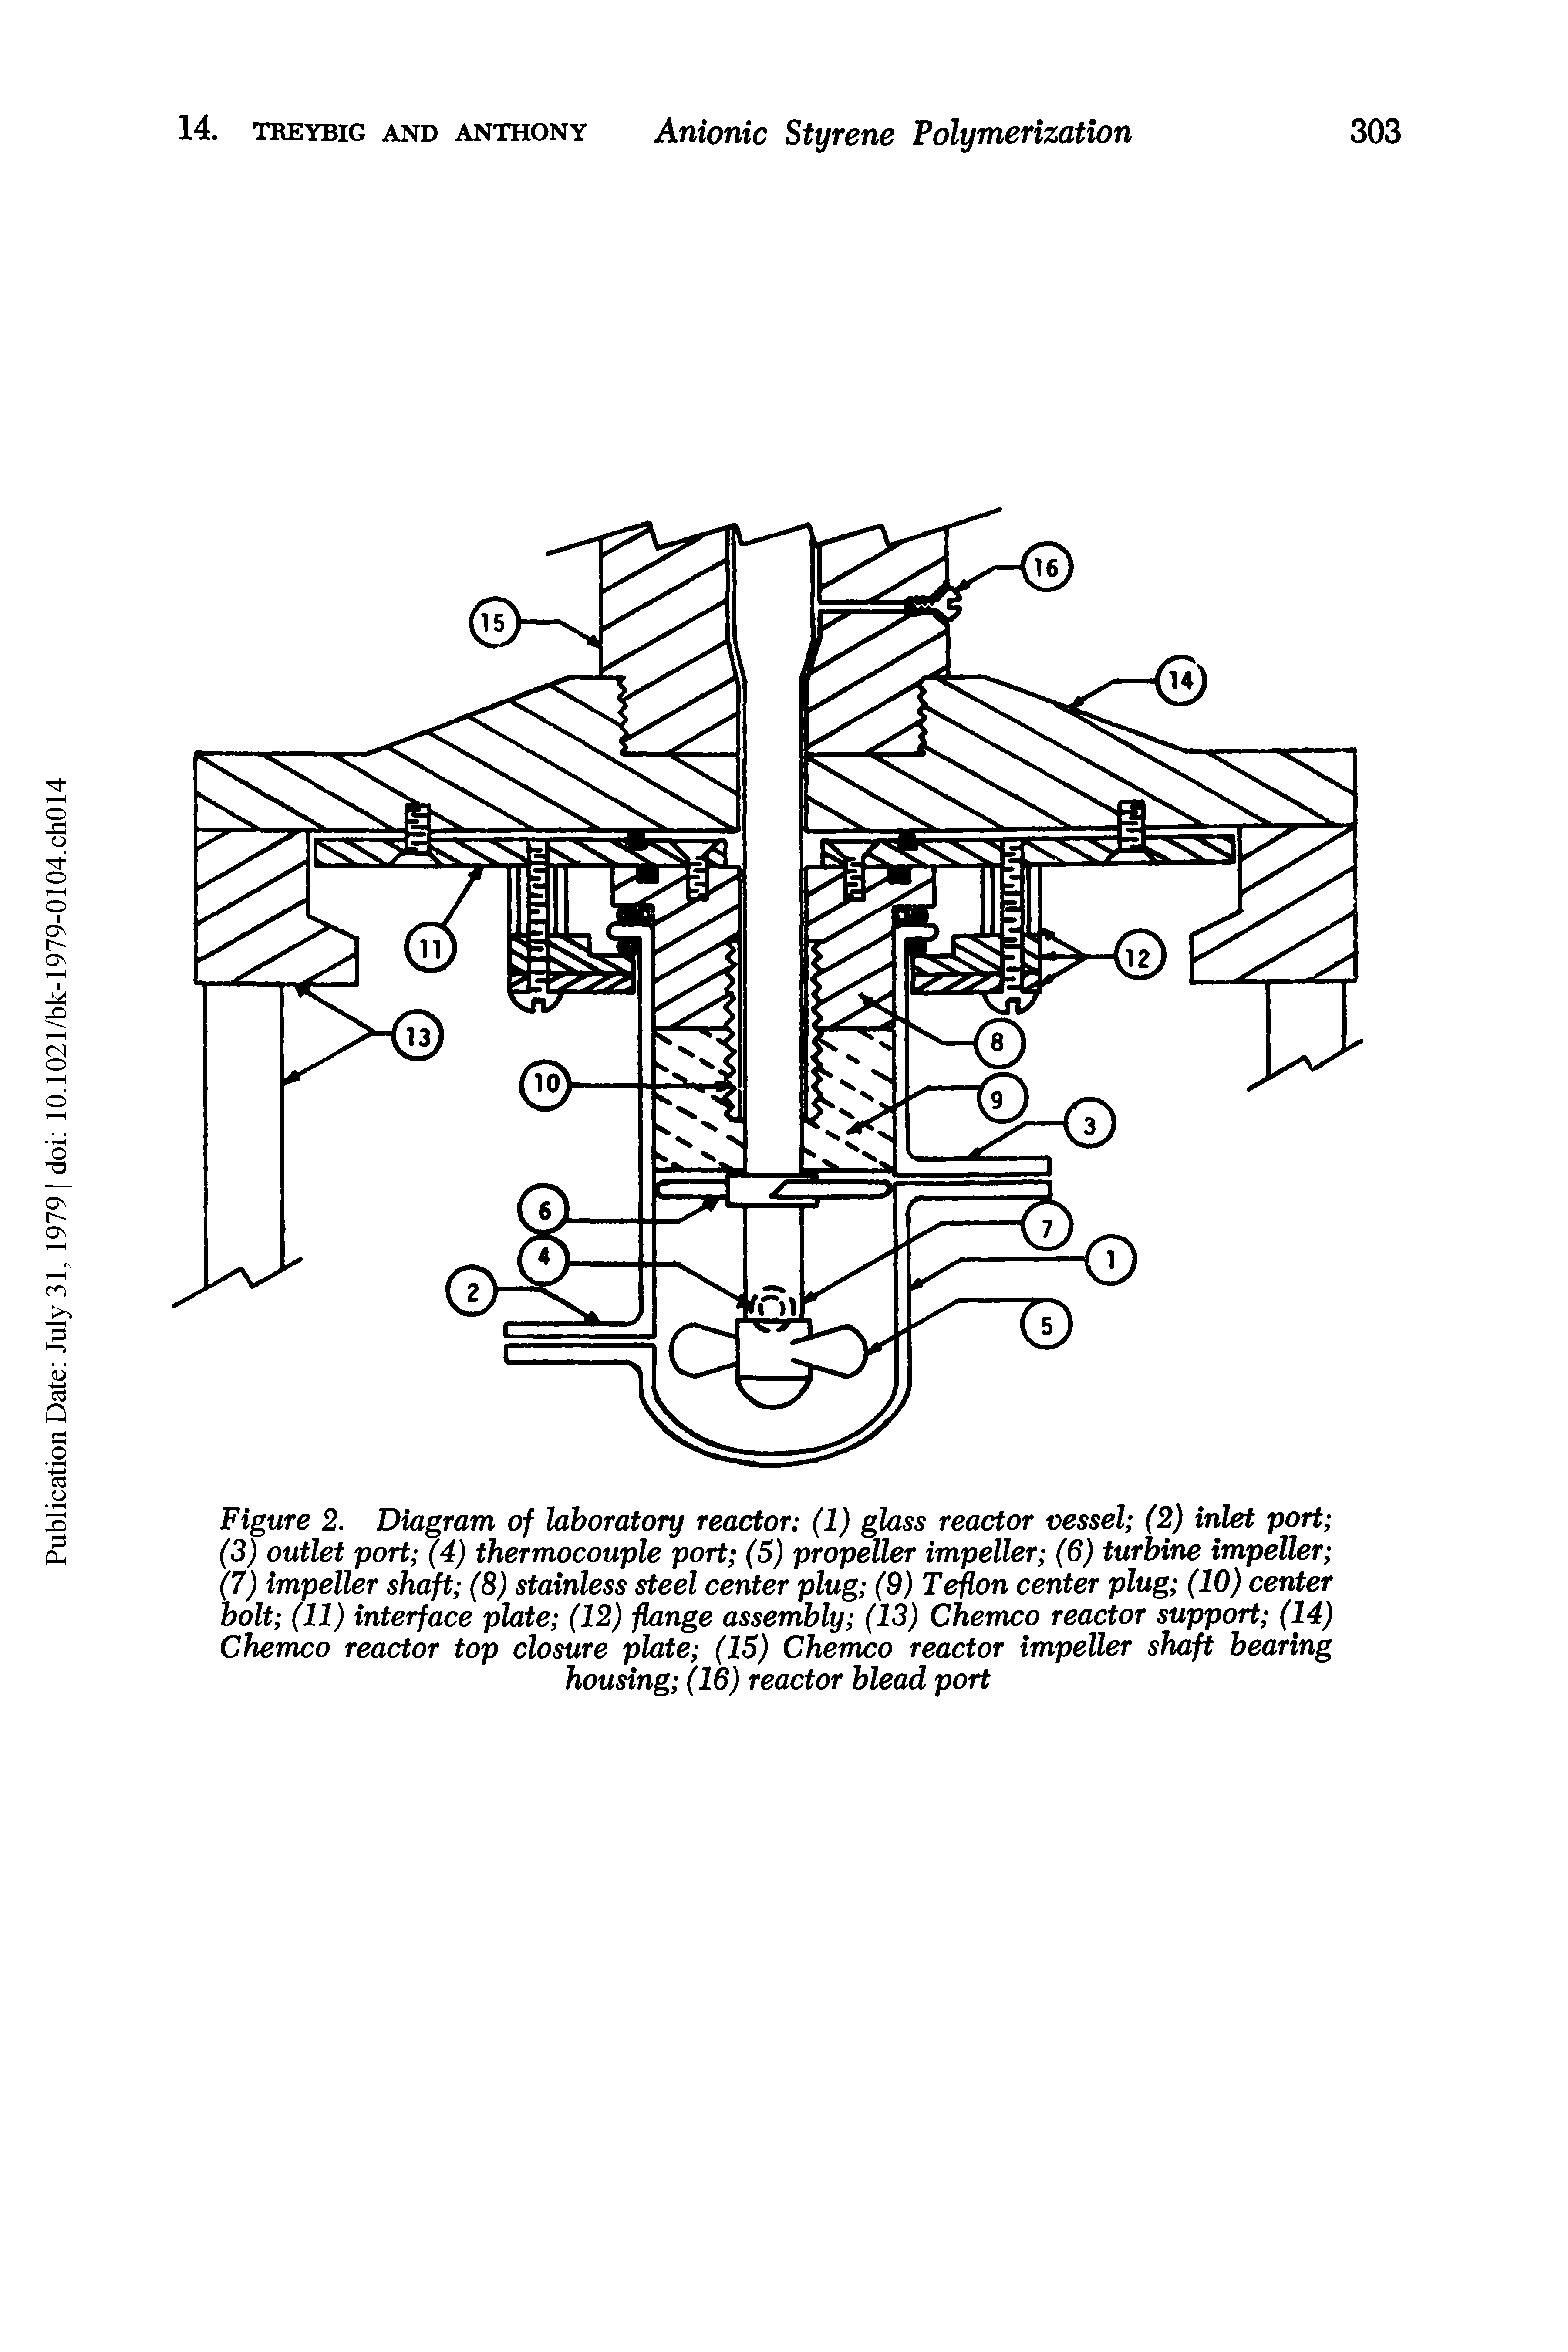 Figure 2. Diagram of laboratory reactor (1) glass reactor vessel (2) inlet port (3) outlet port (4) thermocouple port (5) propeller impeller (6) turbine impeller (7) impeller shaft (8) stainless steel center plug (9) Teflon center plug (10) center bolt (11) interface plate (12) flange assembly (13) Chemco reactor support (14) Chemco reactor top closure plate (15) Chemco reactor impeller shaft bearing housing (16) reactor blead port...